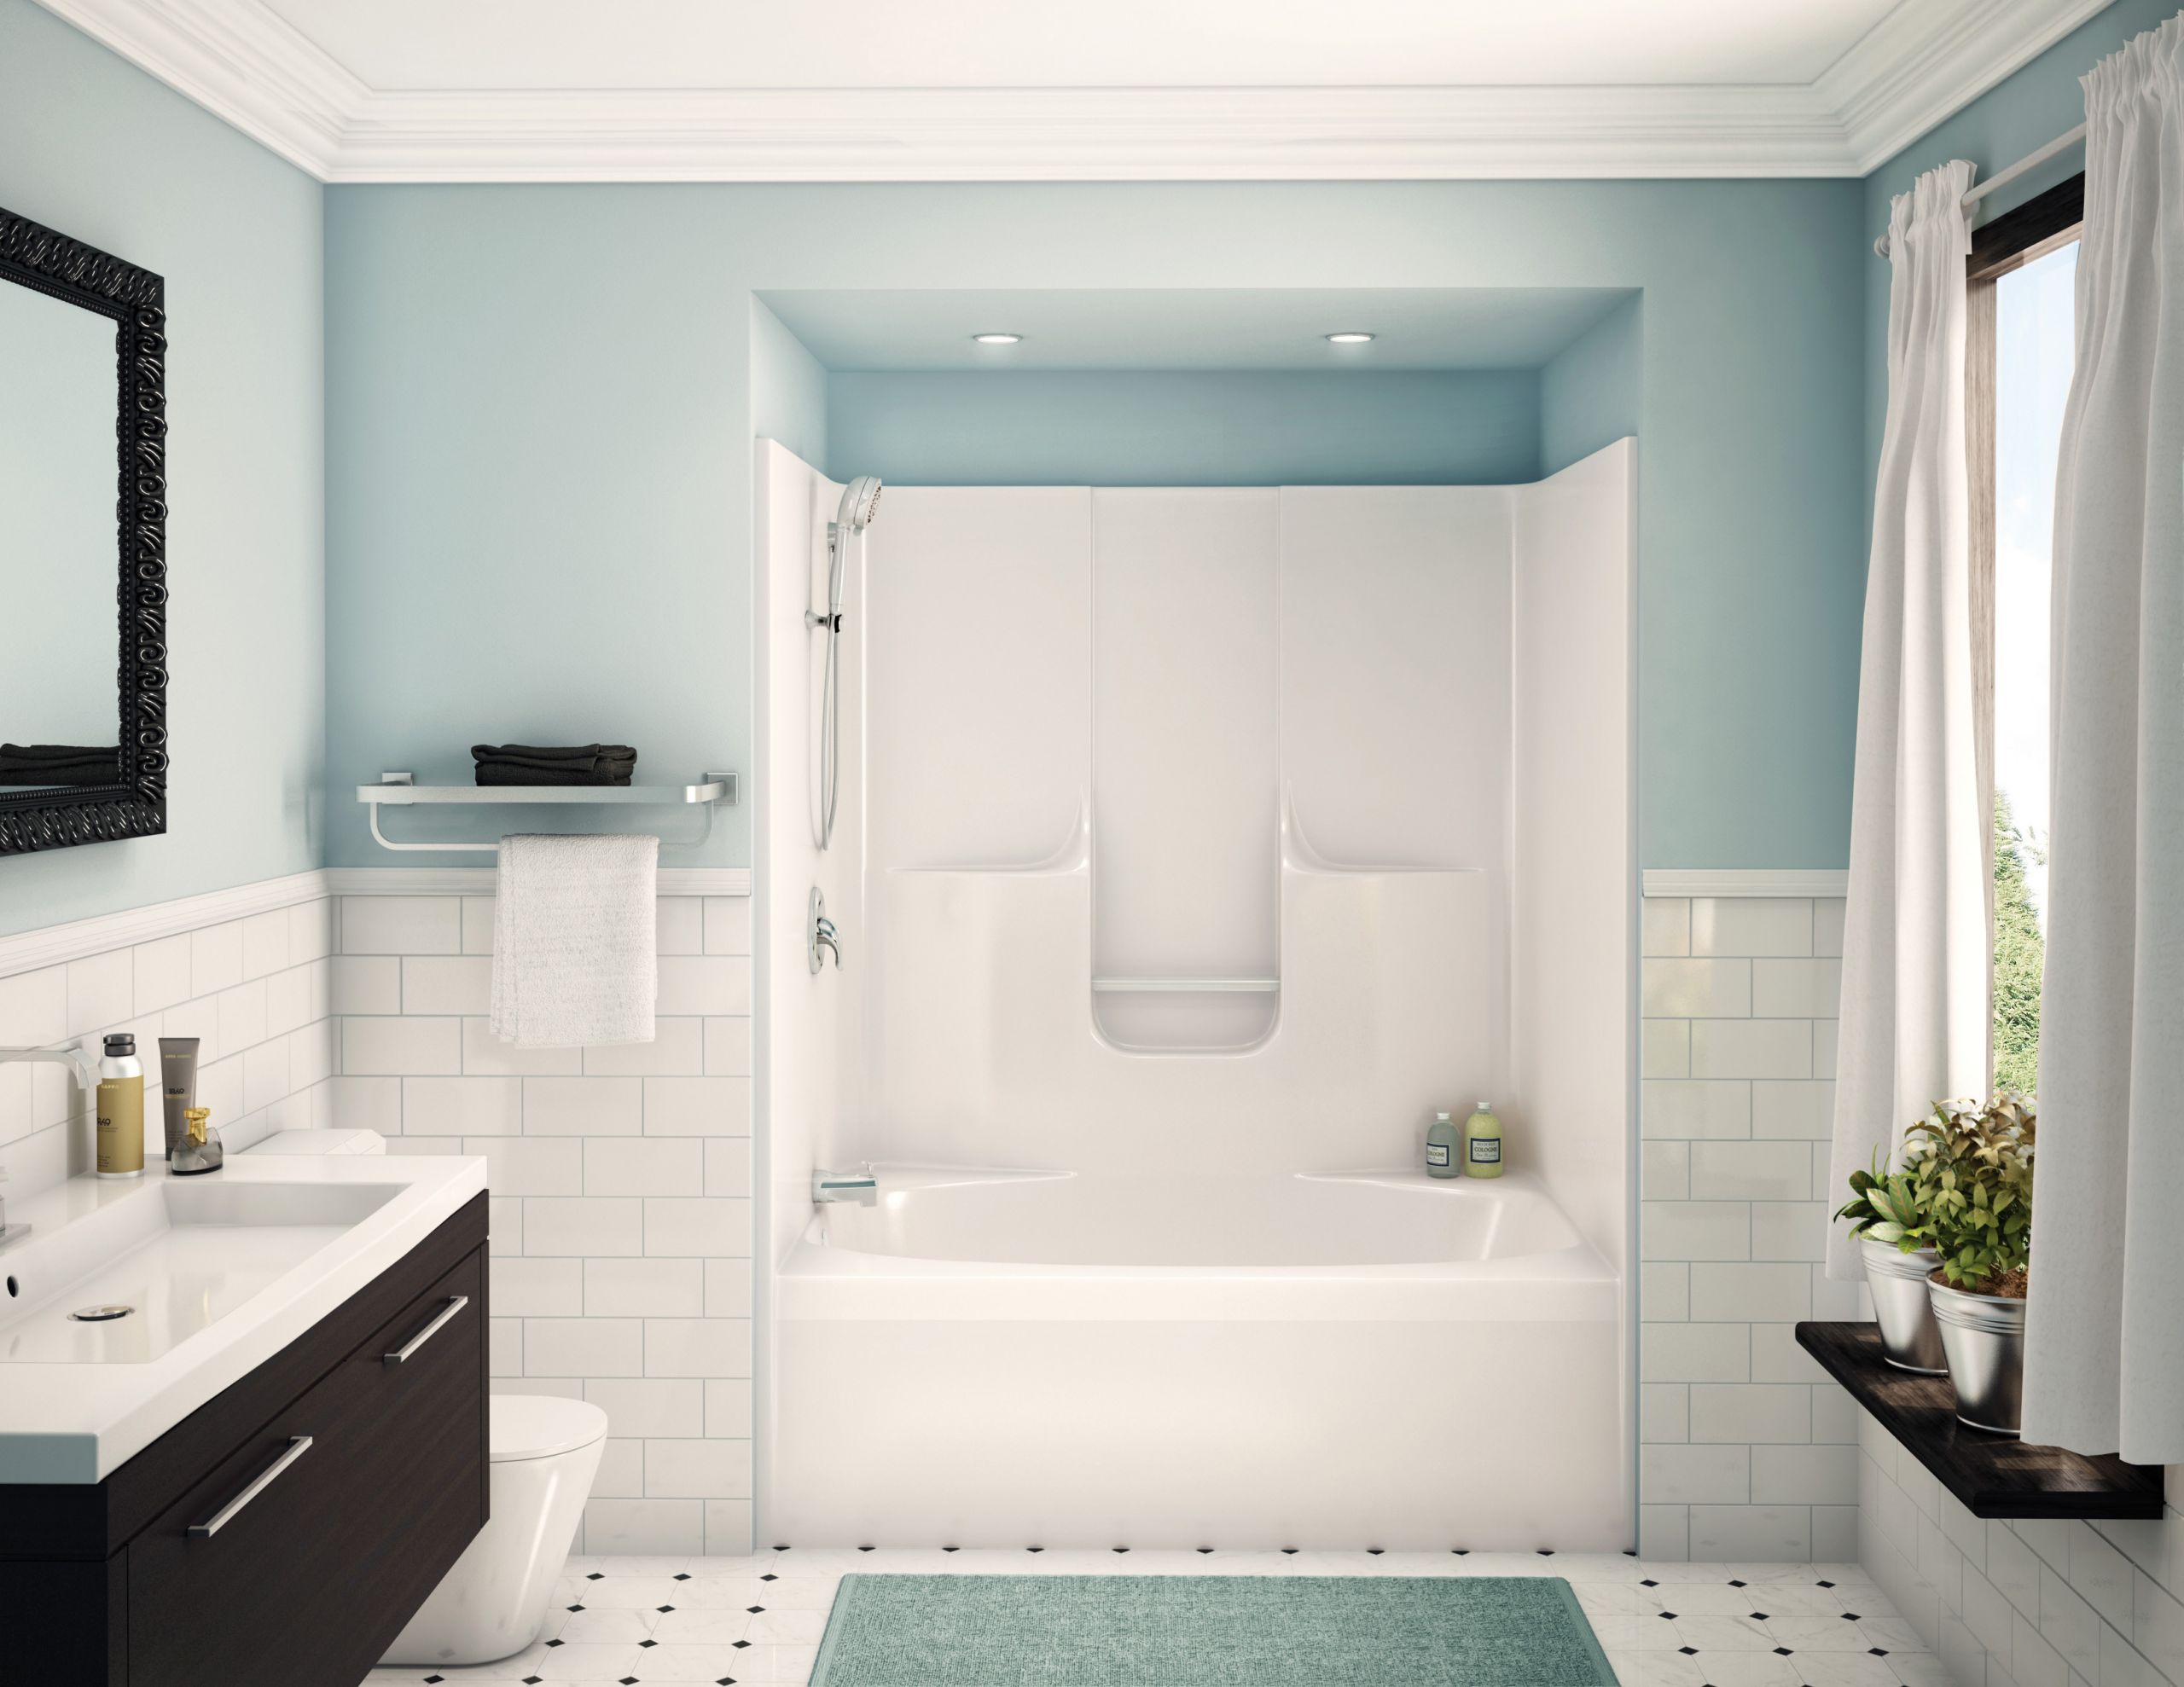 Picture Of Bathroom Showers
 Bathroom Tub Shower – HomesFeed